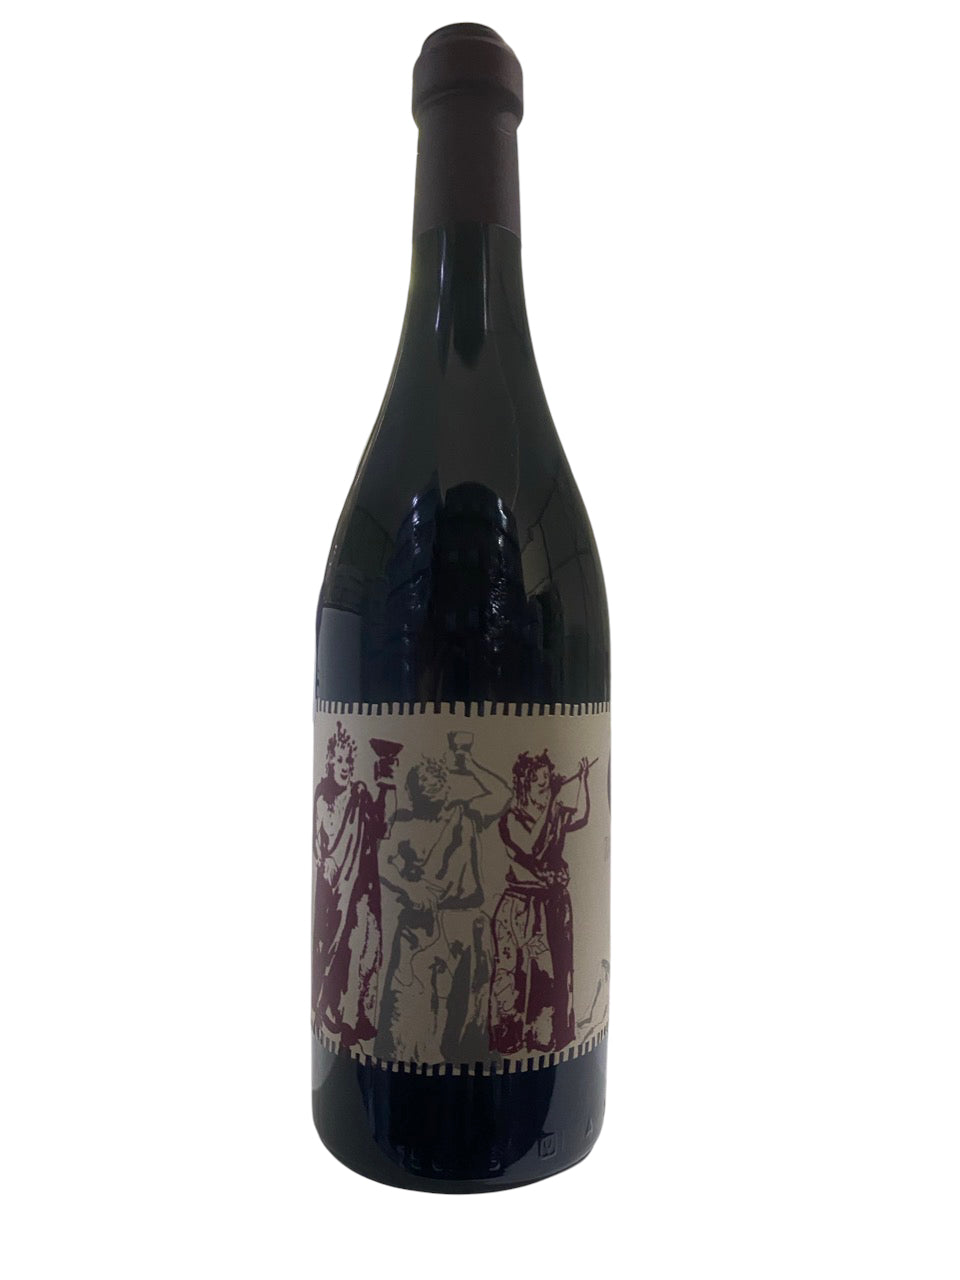 Crveno vino Grande cuvee (cabernet-merlot-teran) Pilato 0,75l